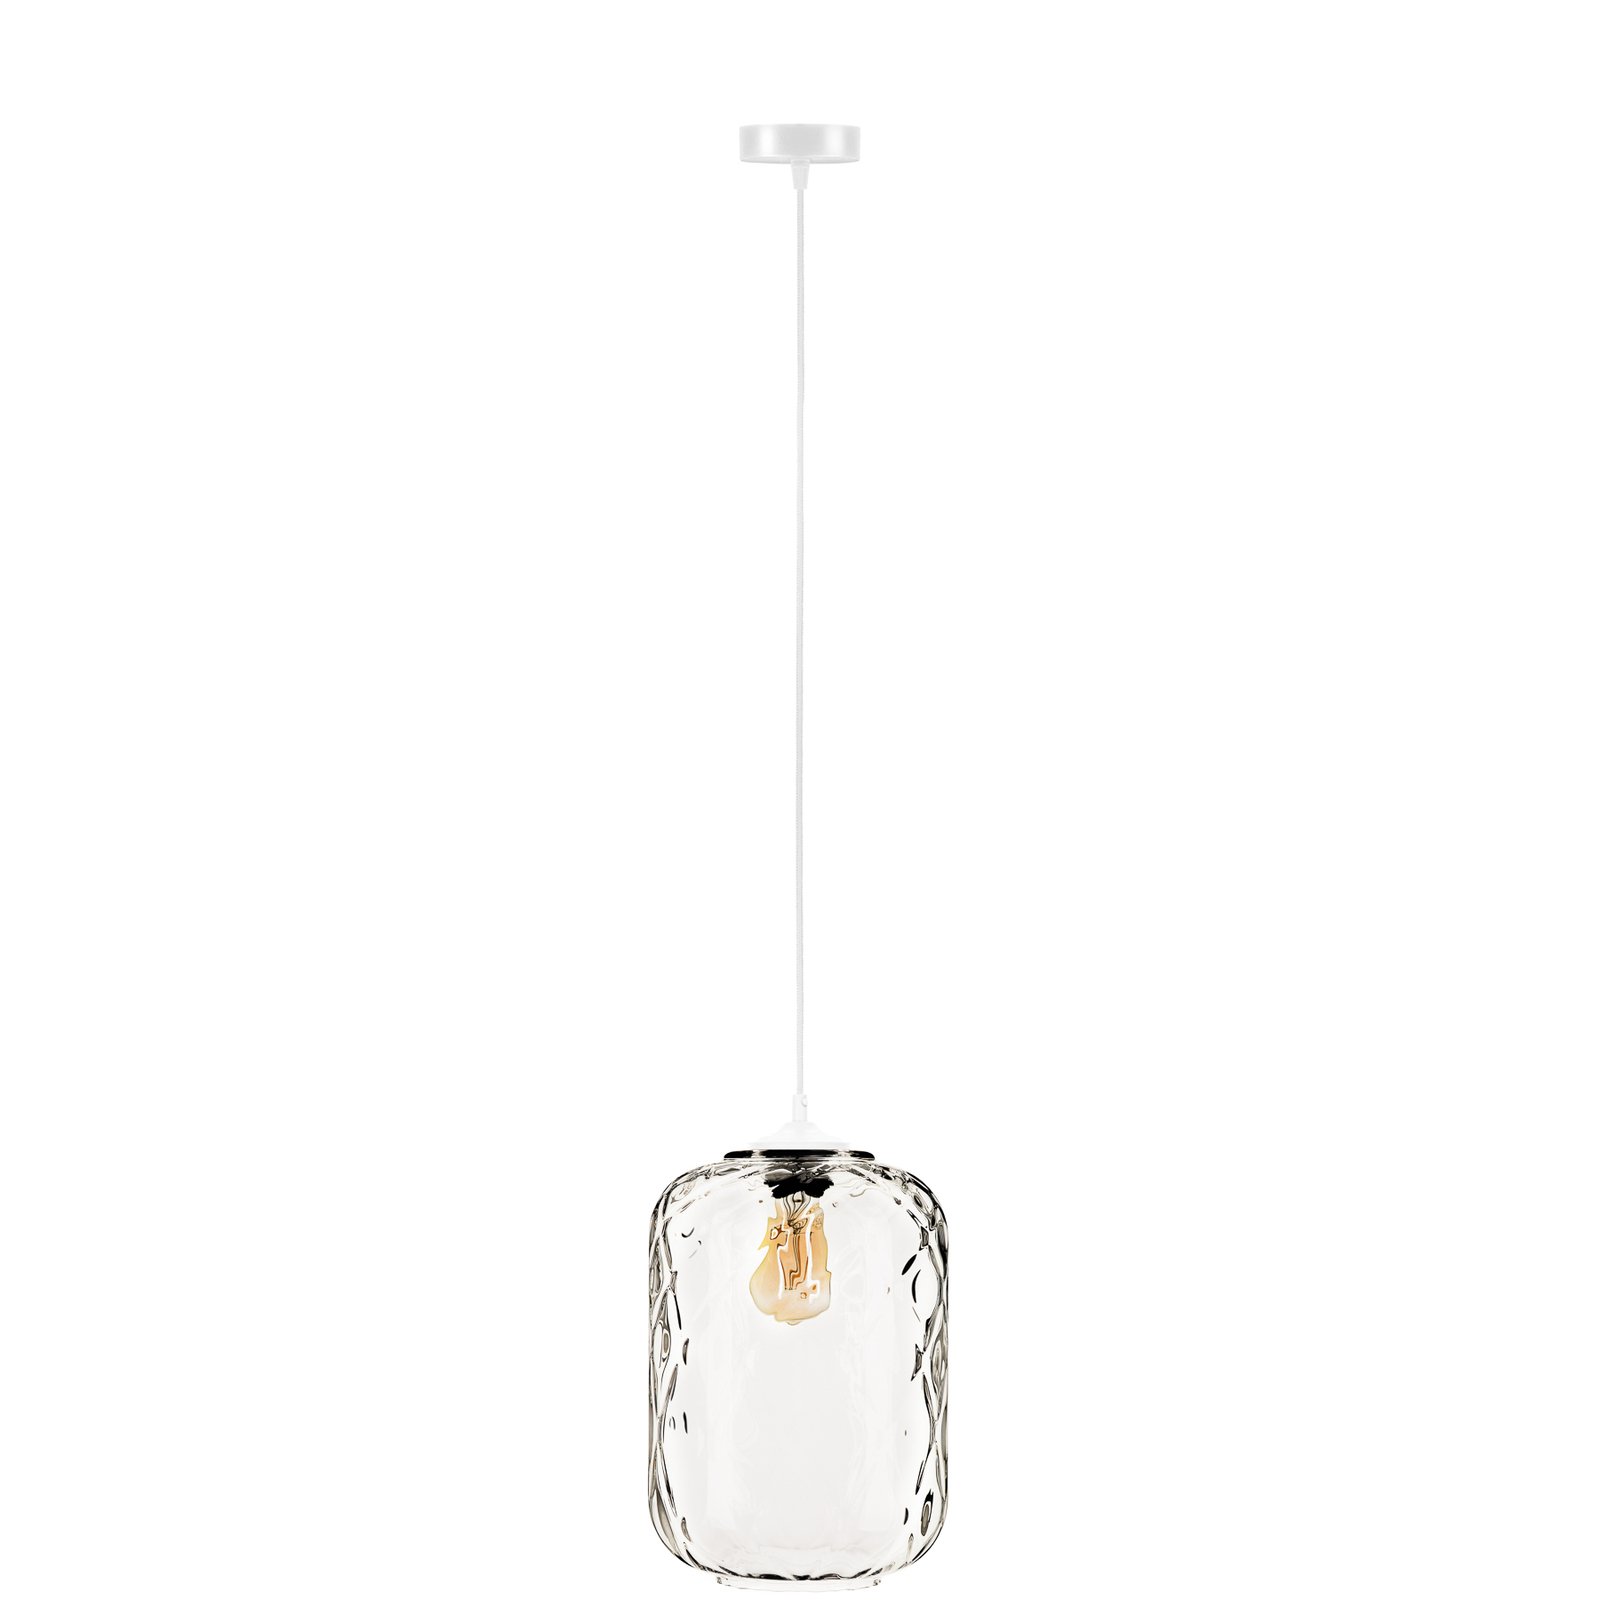 Tezeusz lámpara colgante con pantalla de cristal transparente Ø 24cm